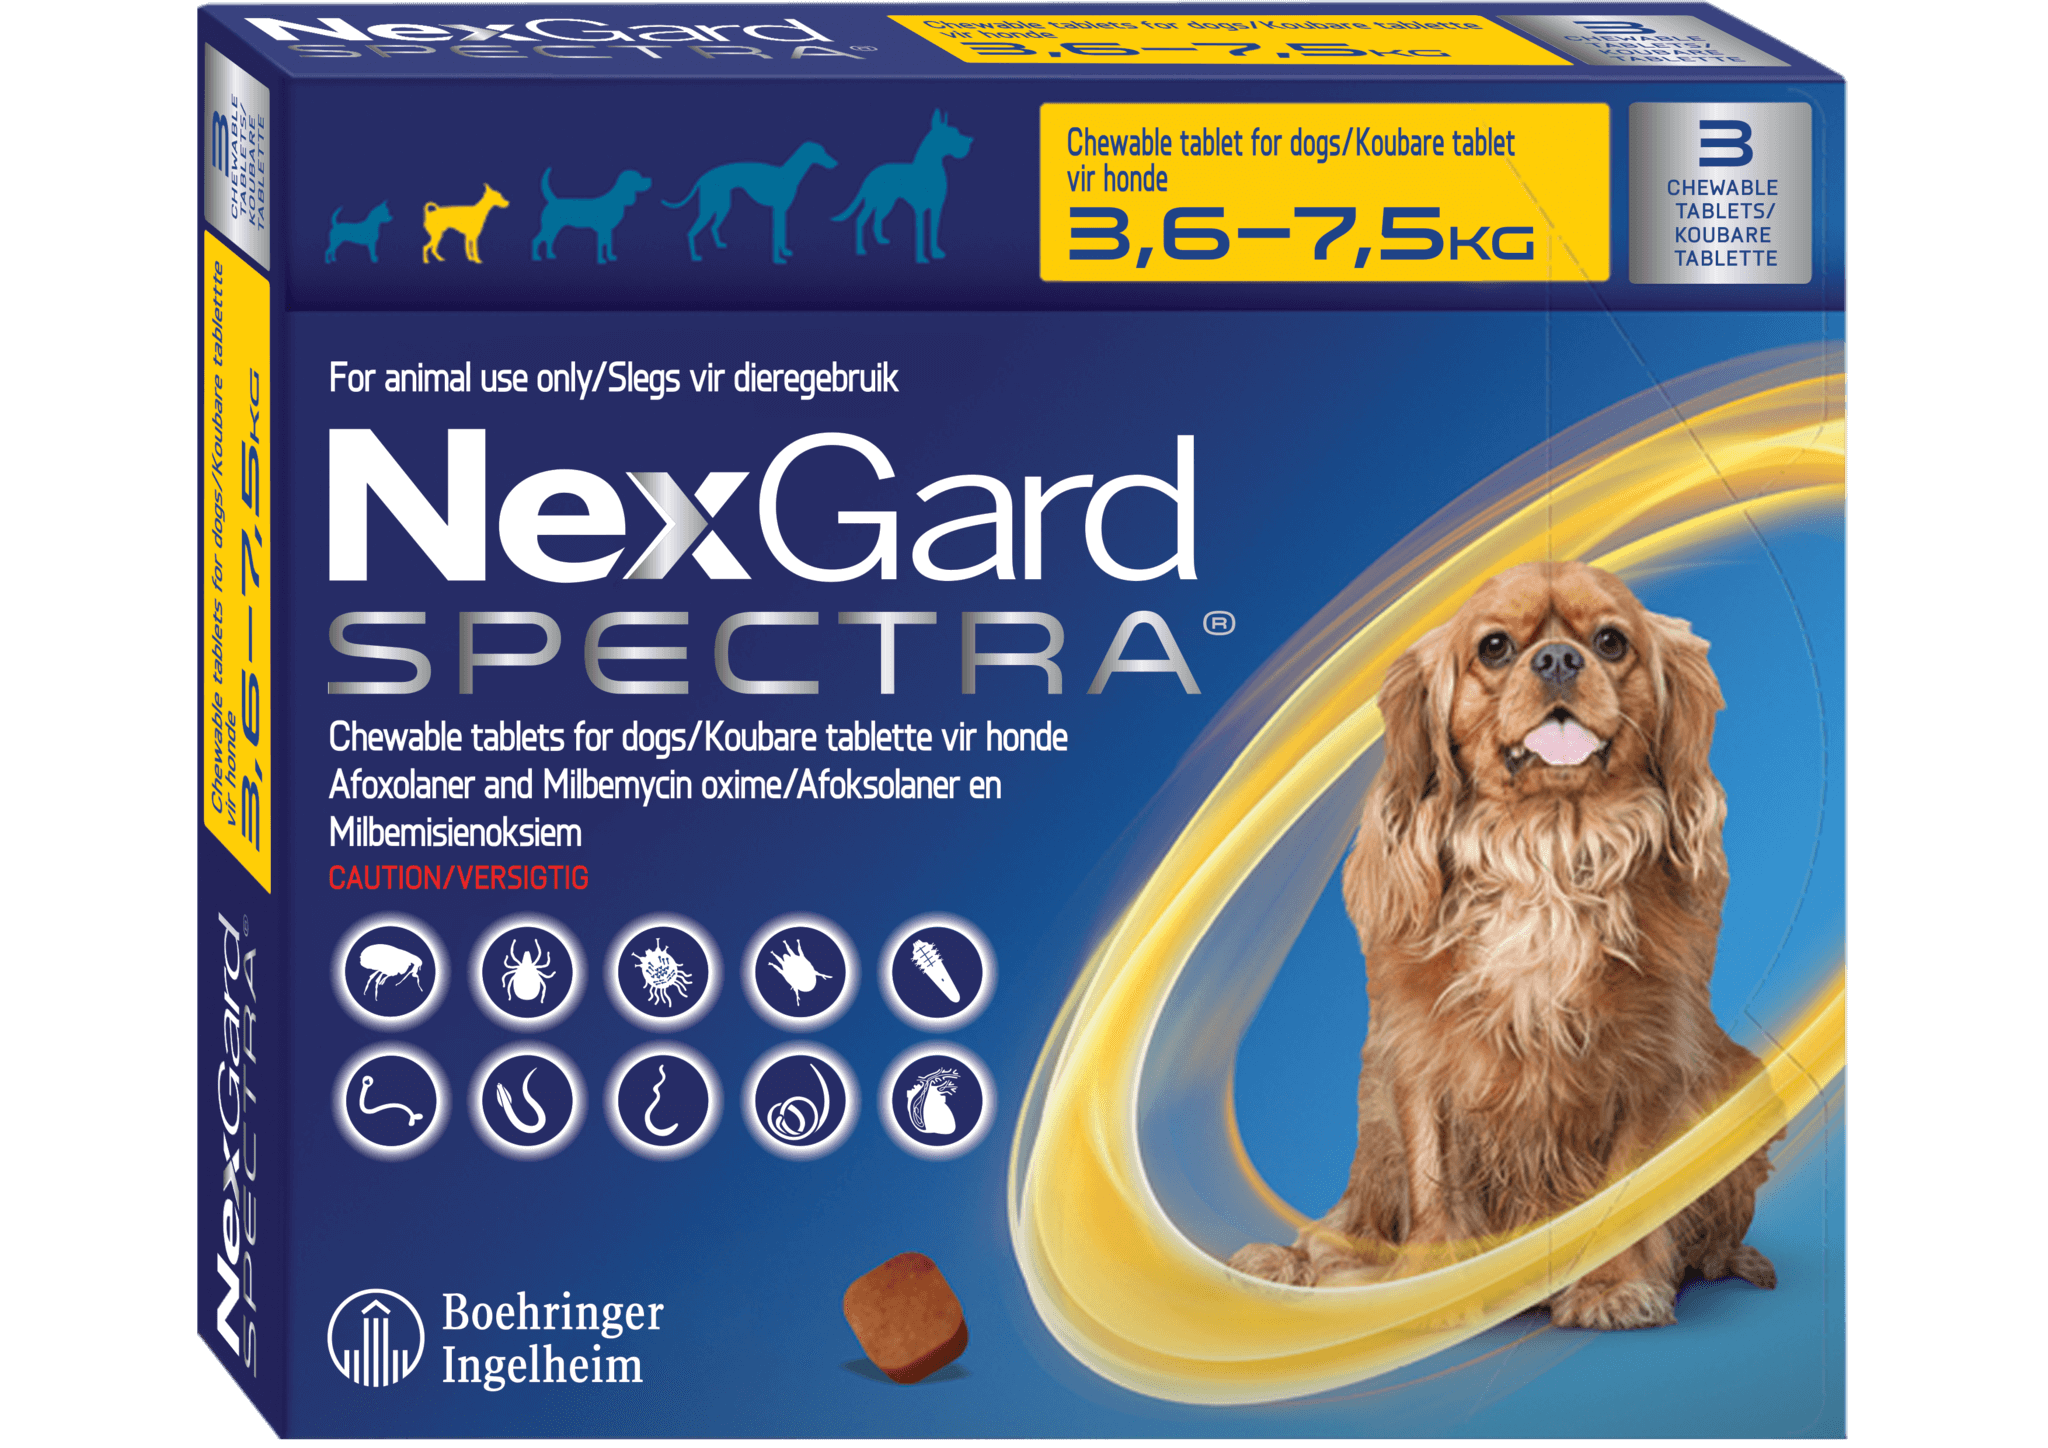 НЕКСГАРД спектра для собак 2-3.5 кг. НЕКСГАРД спектра для собак 3,5-7. НЕКСГАРД для собак 7.5. NEXGARD Spectra для собак.